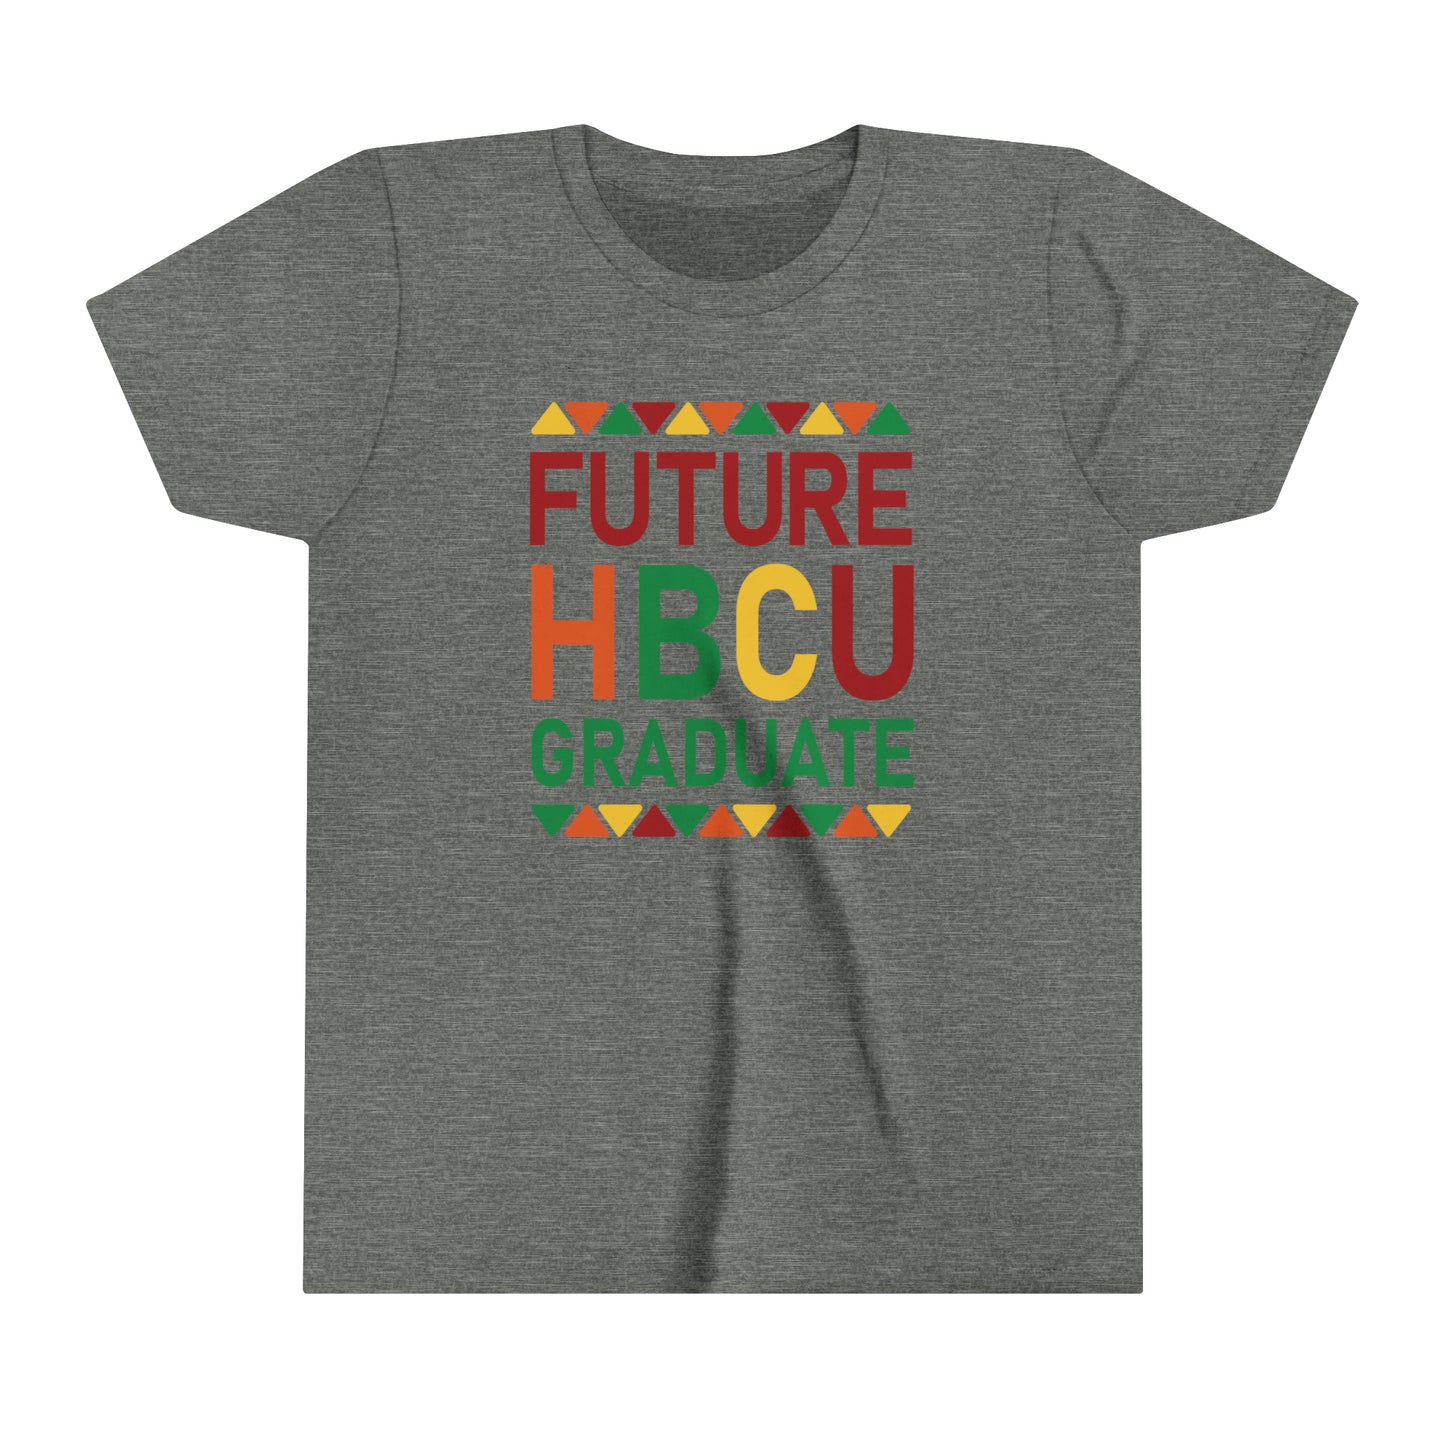 Future HBCU graduate Youth Short Sleeve Tee